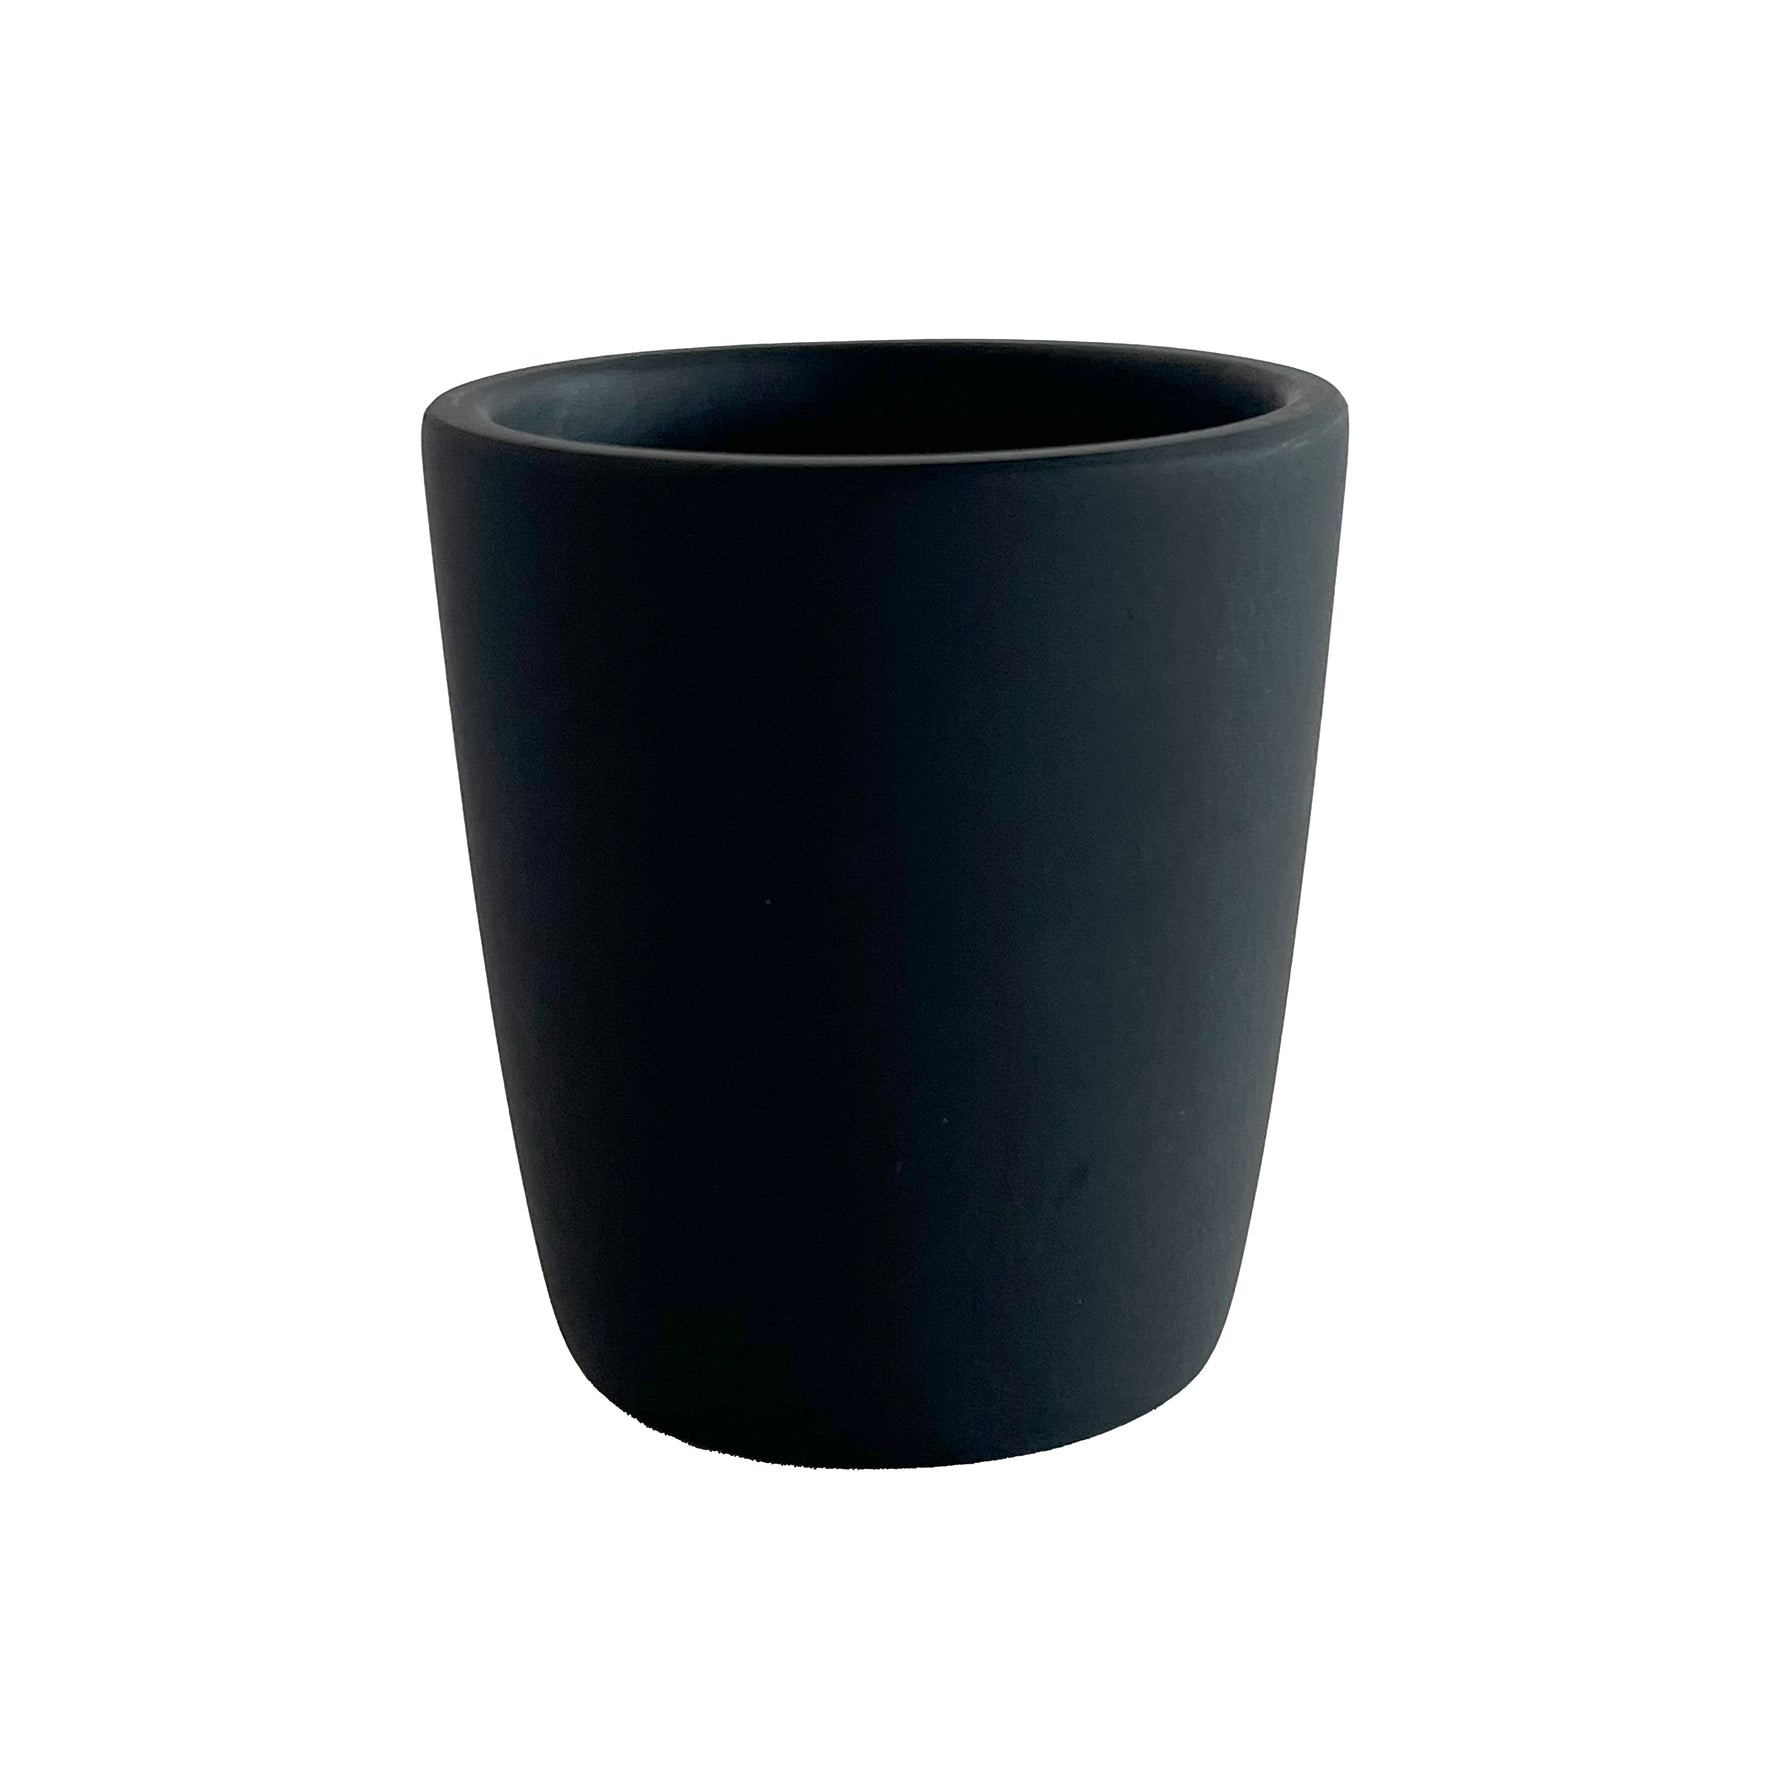 Resin Cup 8.8x6.3x10cm, Solid Black Color - كوب ريزن 8.8x6.3x10سم, لون أسود ساده